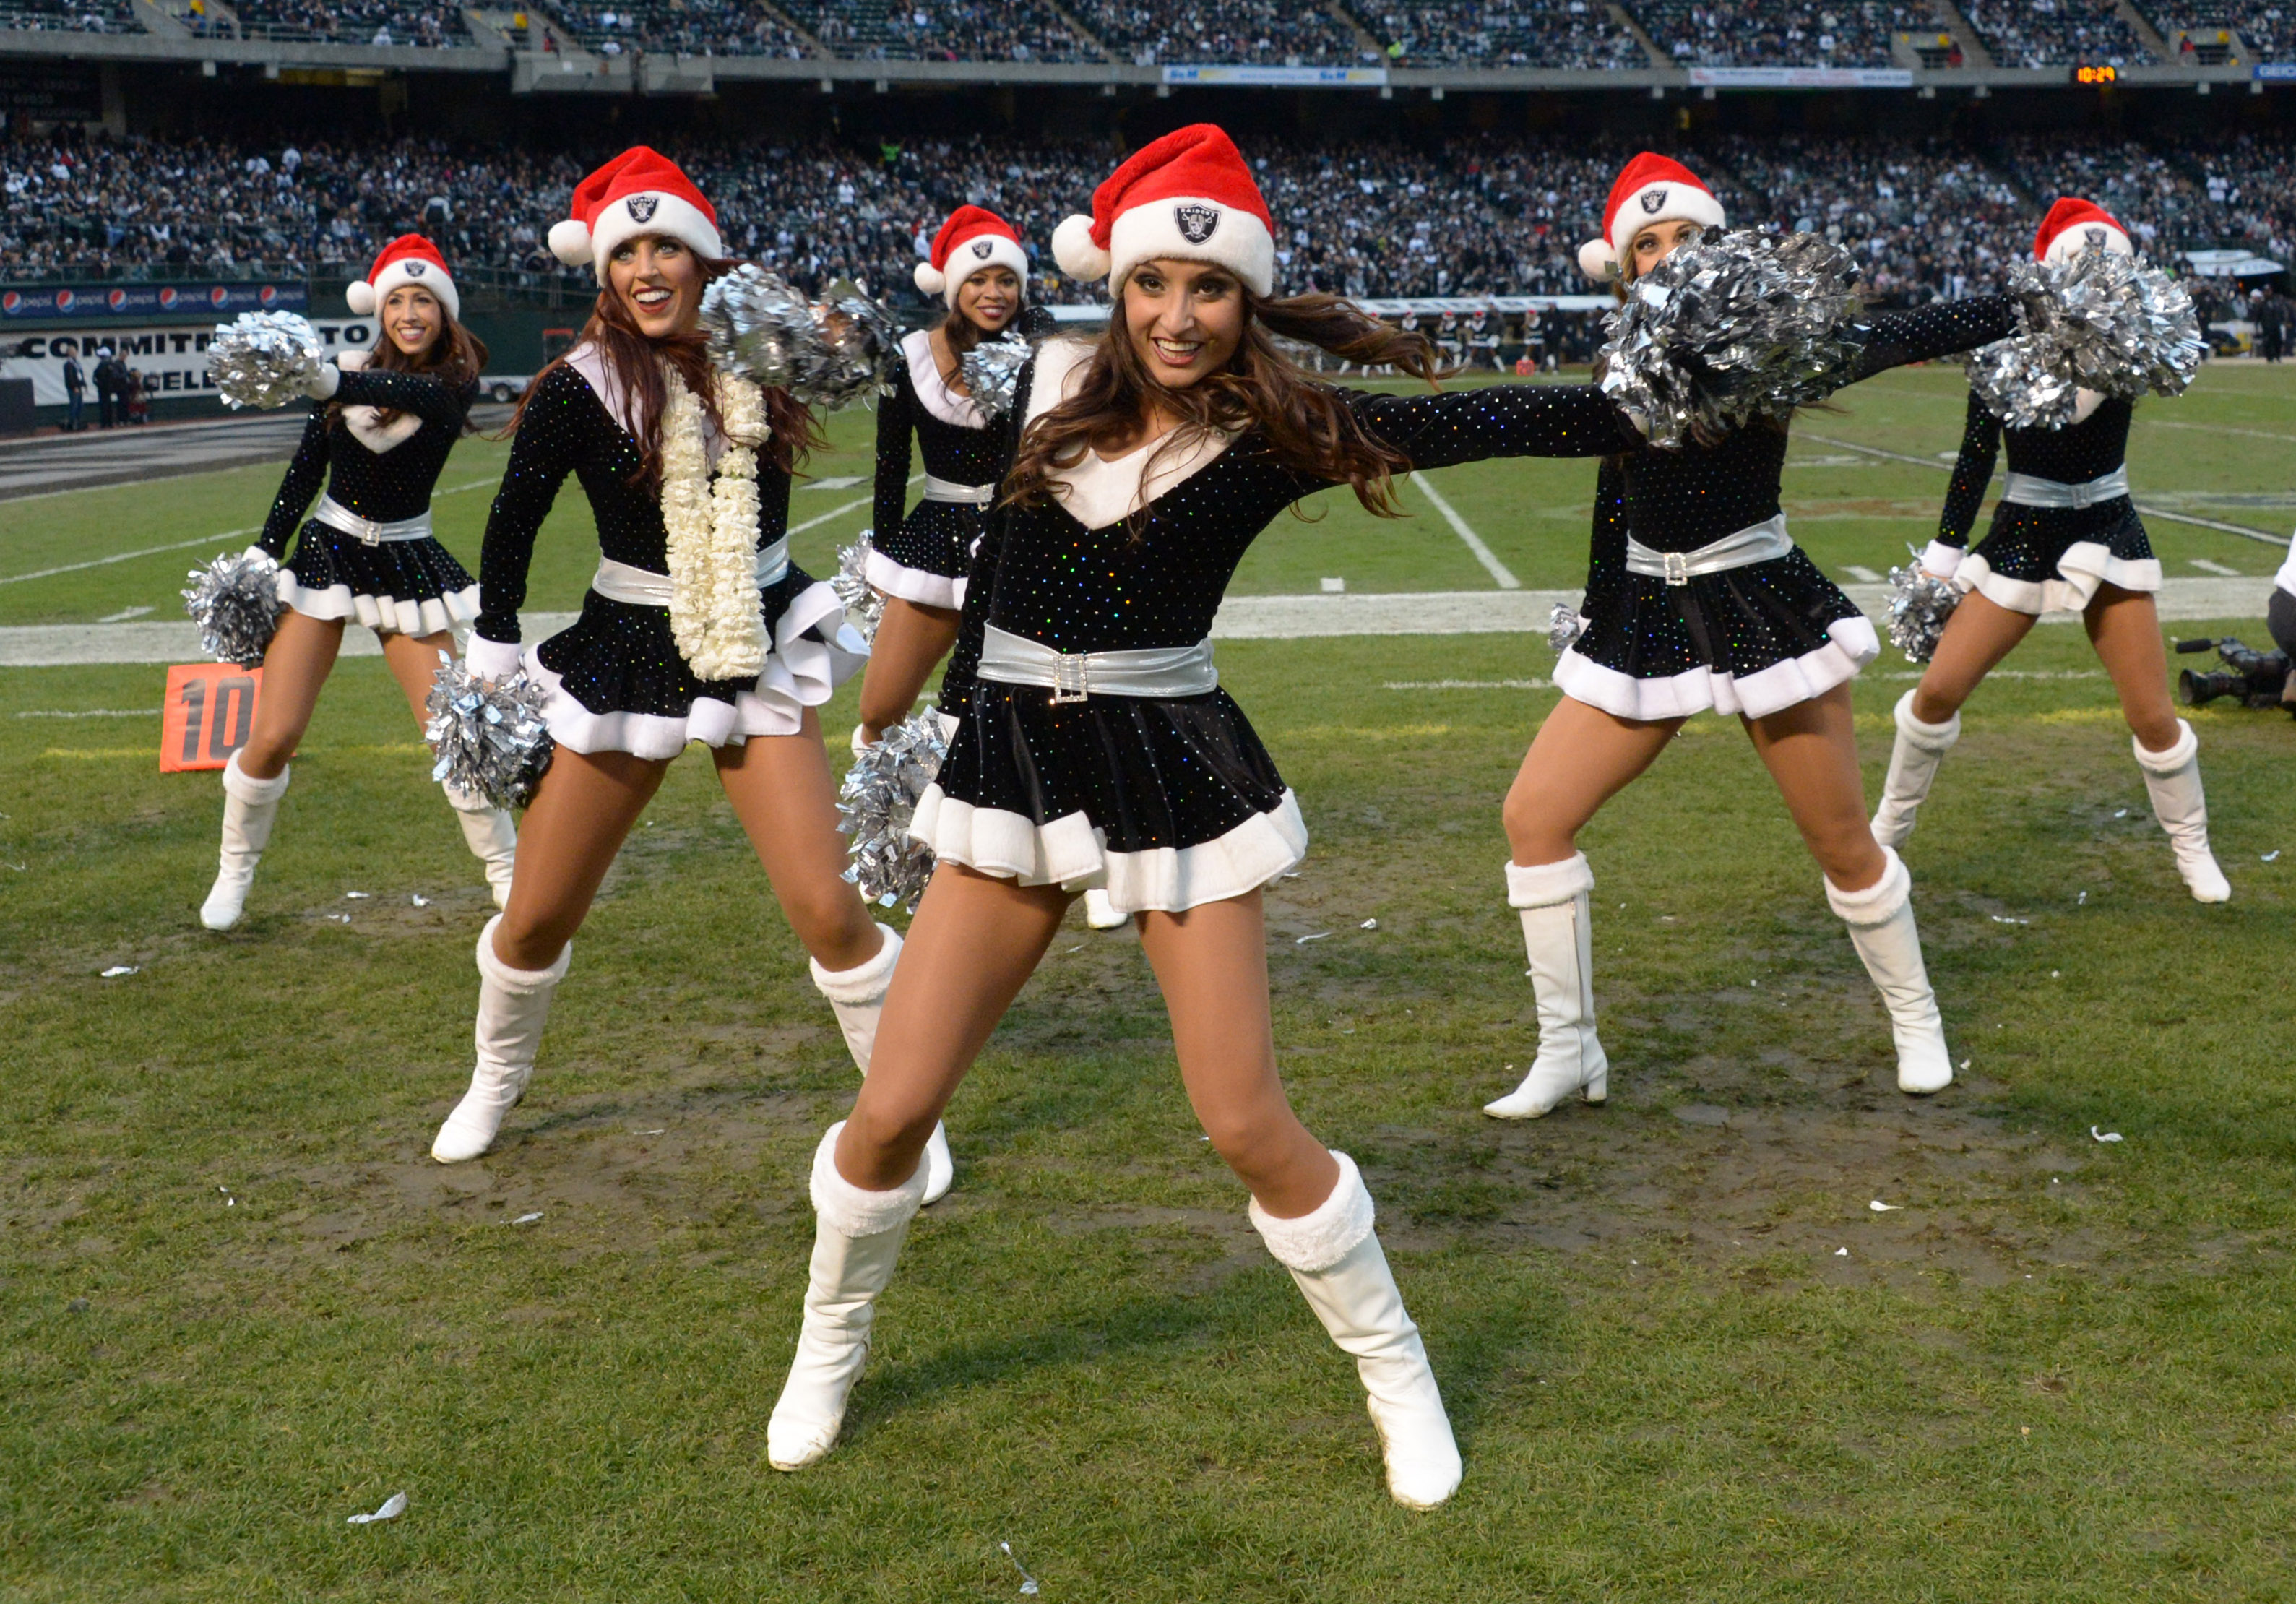 Raiders cheerleaders are suing the Oakland Raiders